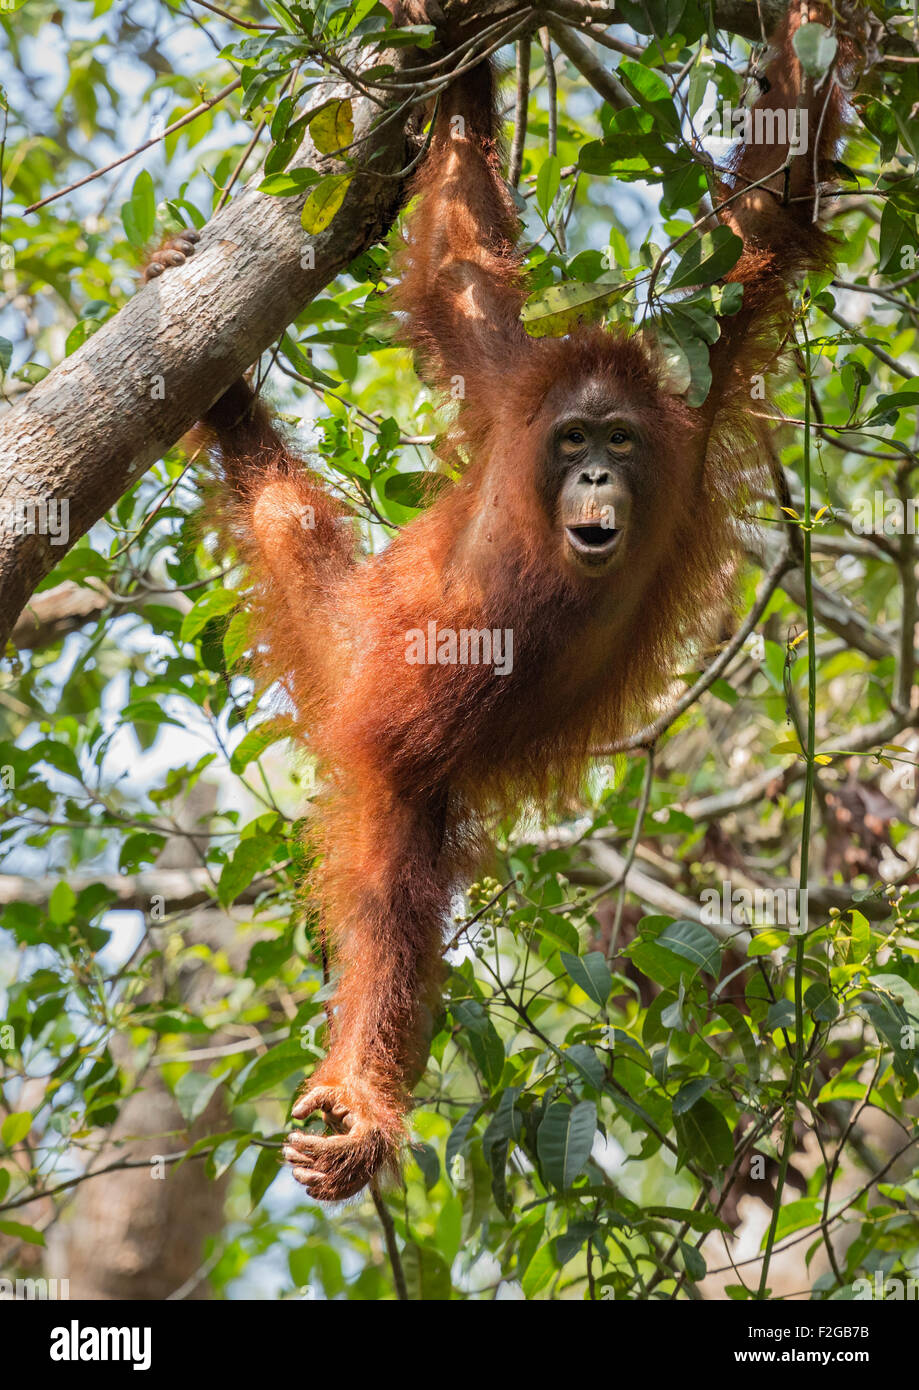 Orangutan juvenile hanging from branch Stock Photo